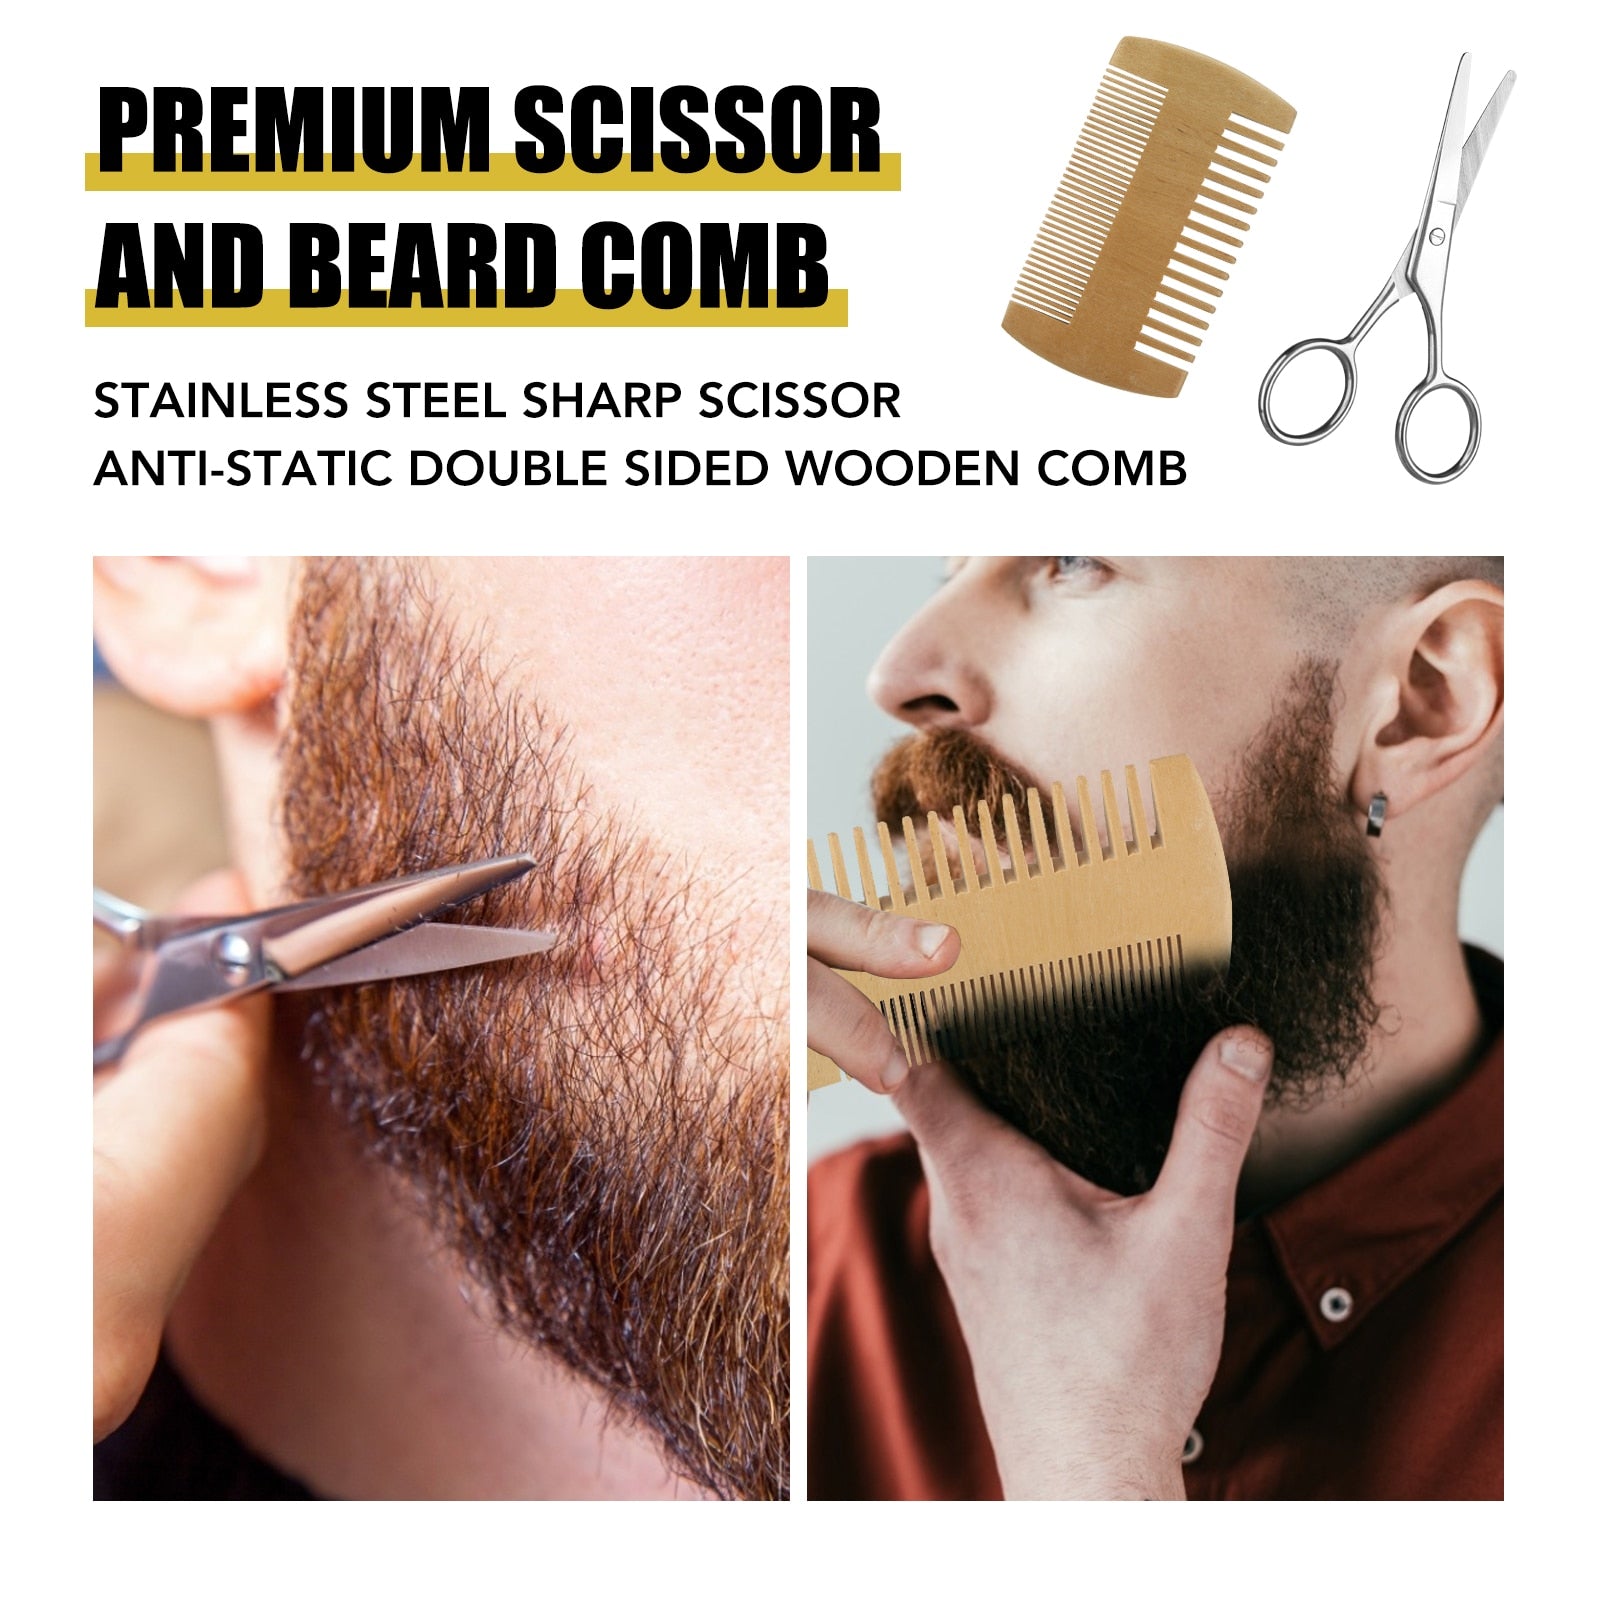 SKINER 5pcs The Men Beard Oil Growth Kit - HAB - Hair And Beauty